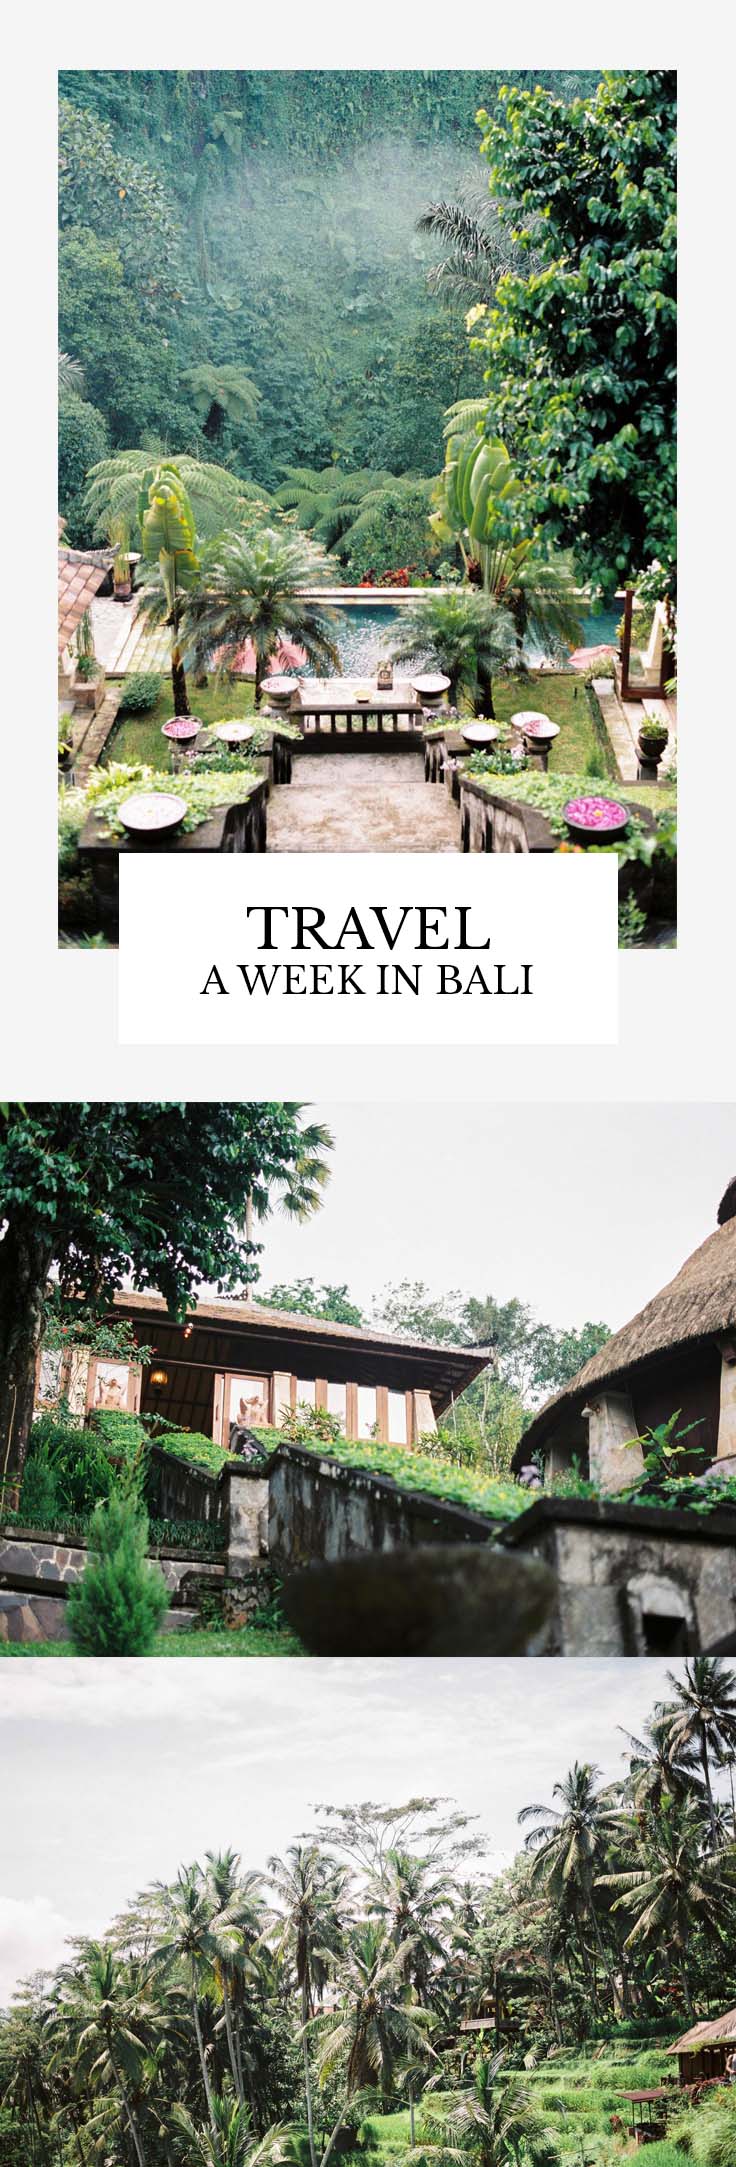 Travel - A week in Bali